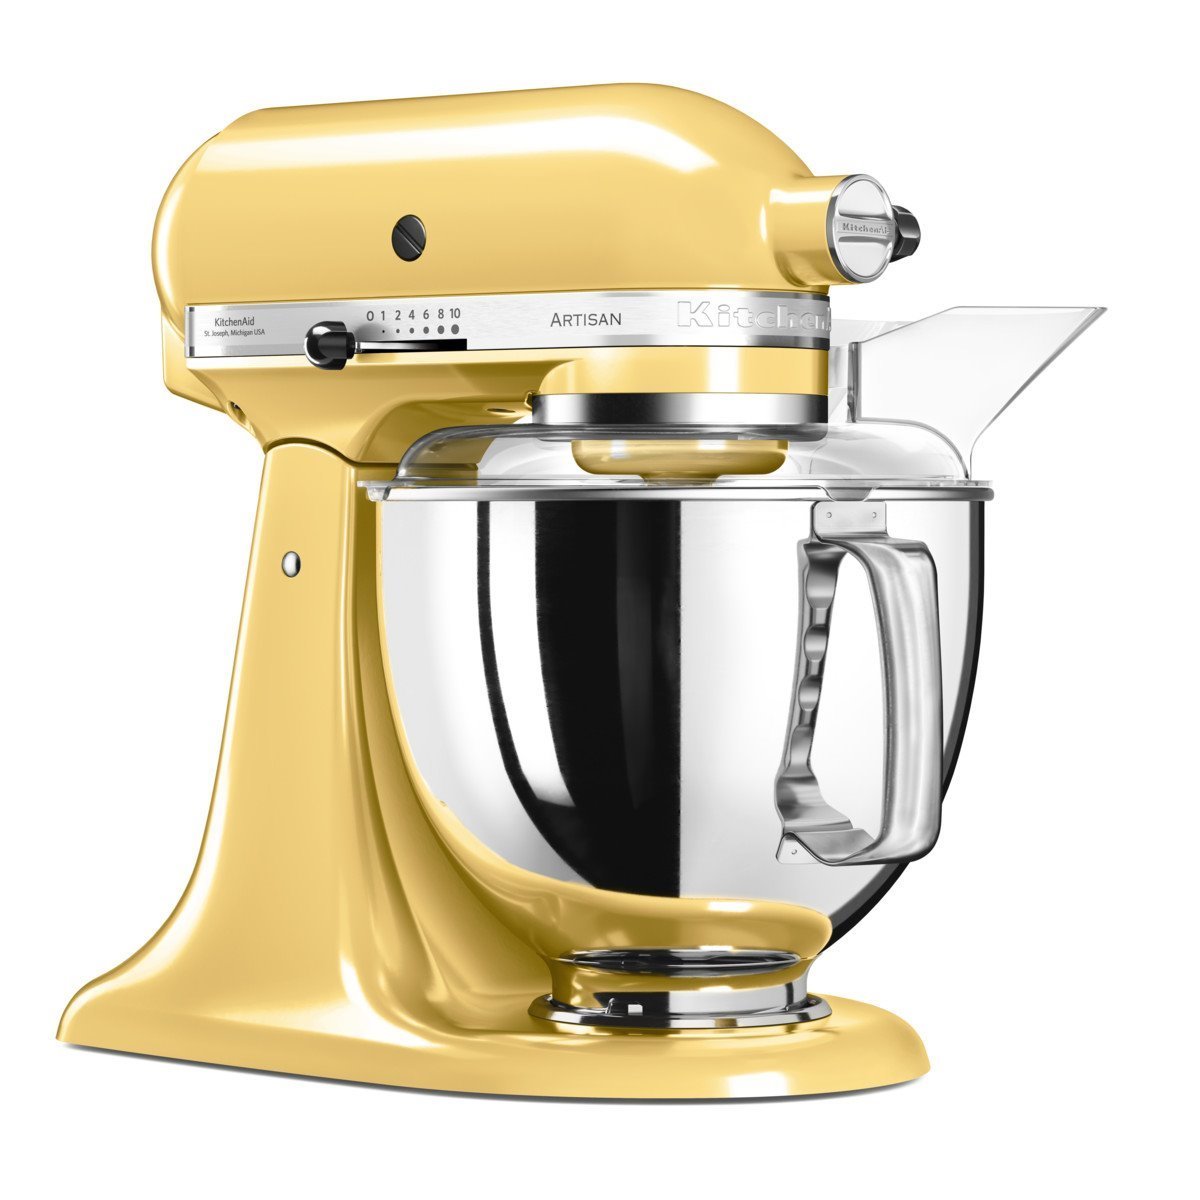 Artisan Mixer, 4.8L, Model 175, Majestic Yellow color - KitchenAid brand